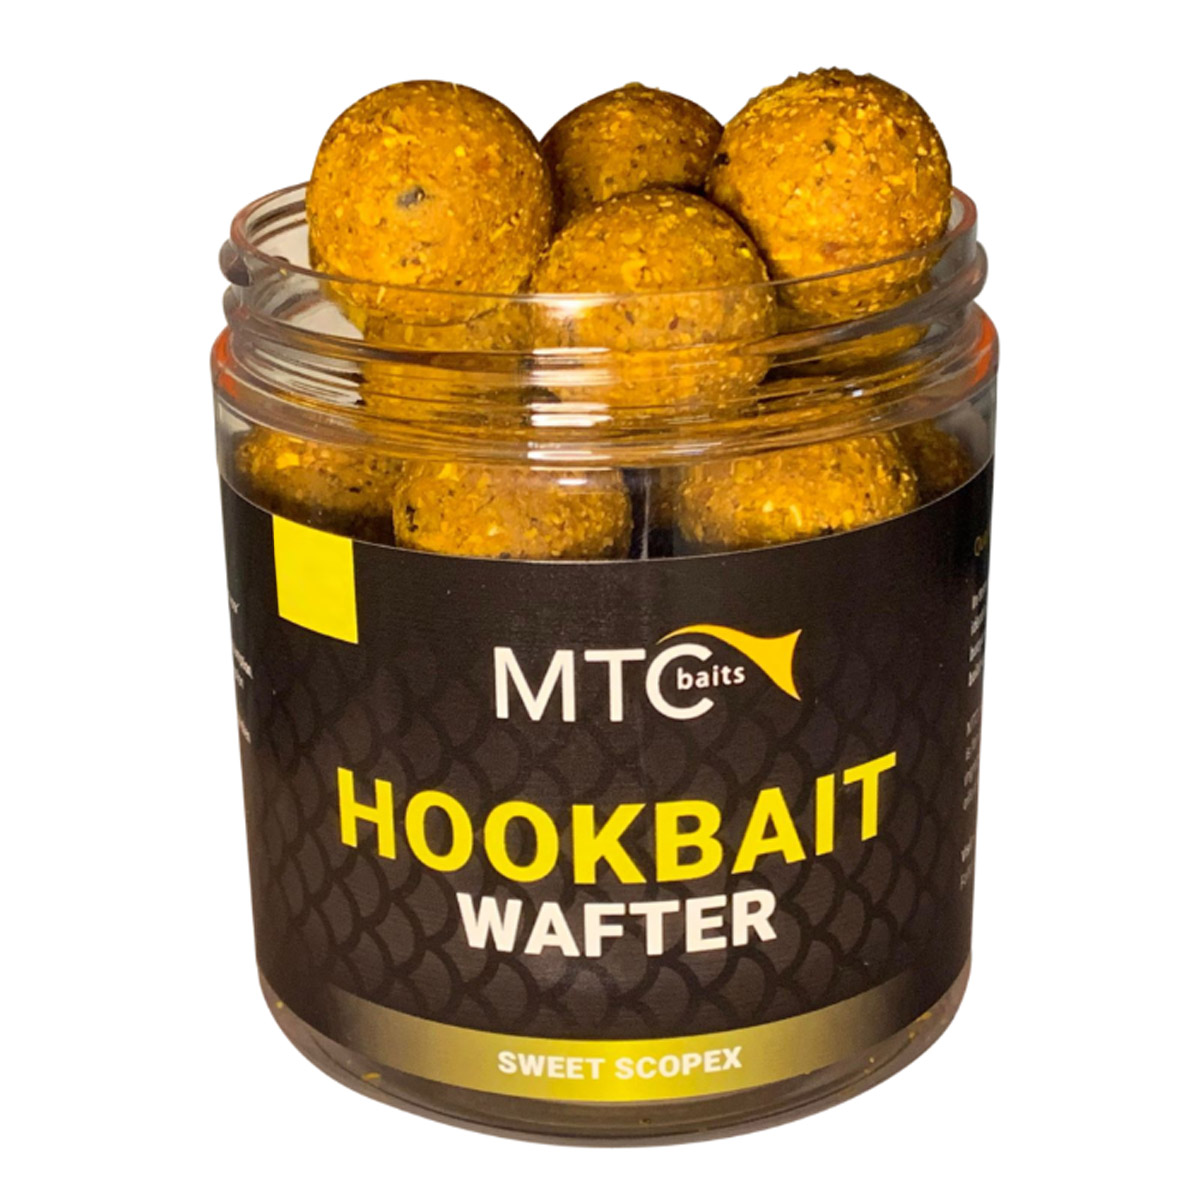 MTC Baits Hookbait Wafter Sweet ScopeX 24 MM